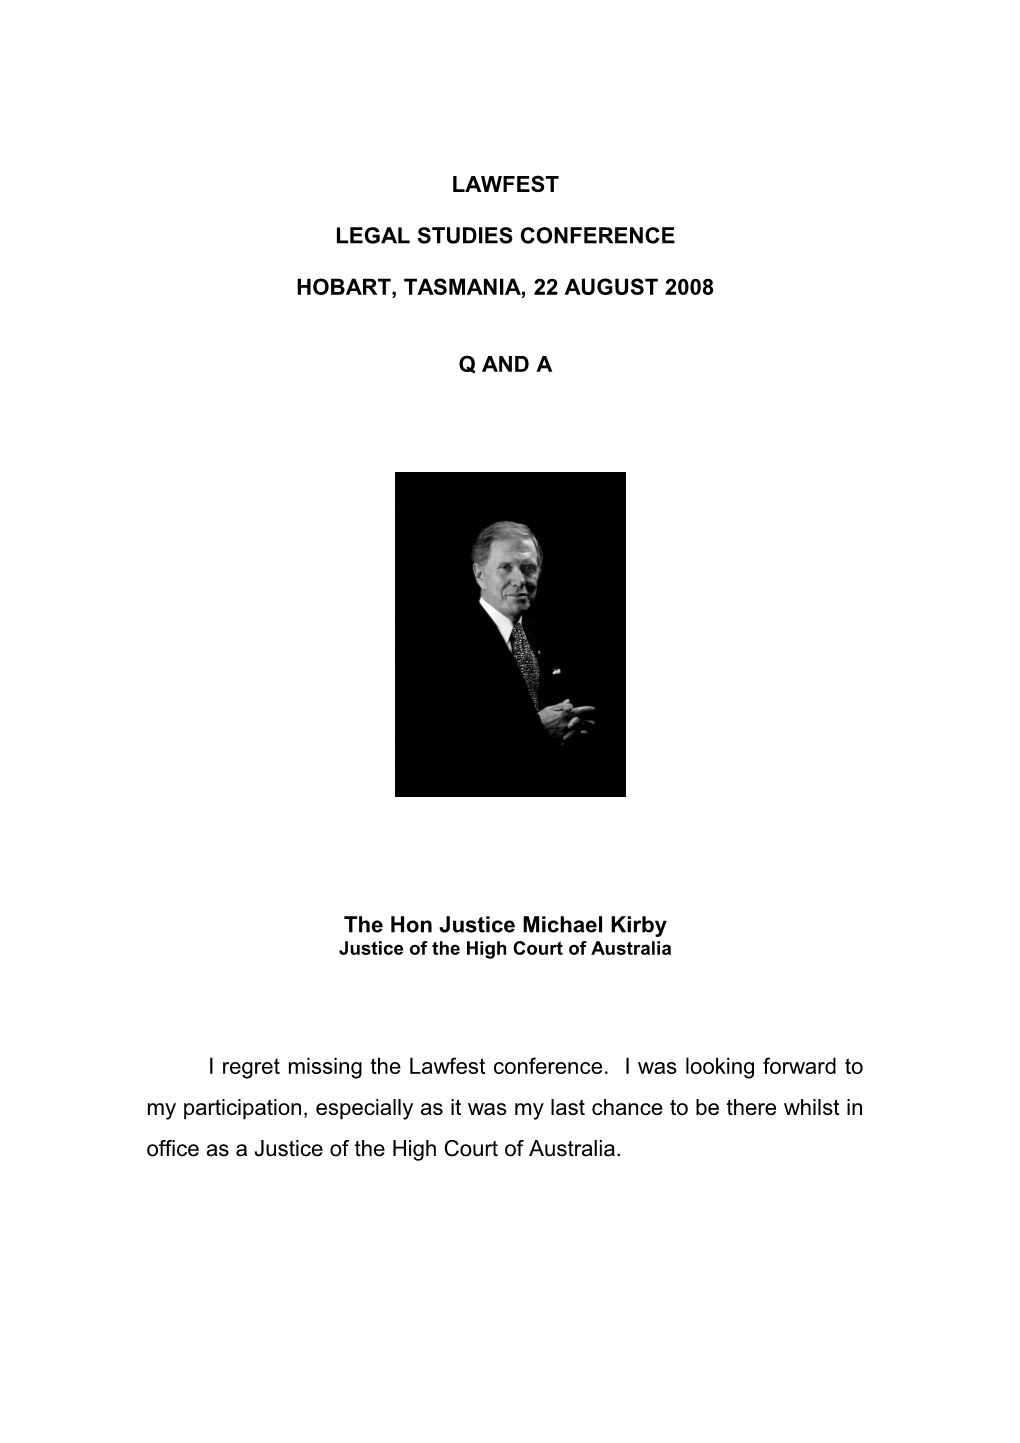 Legal Studies Conference